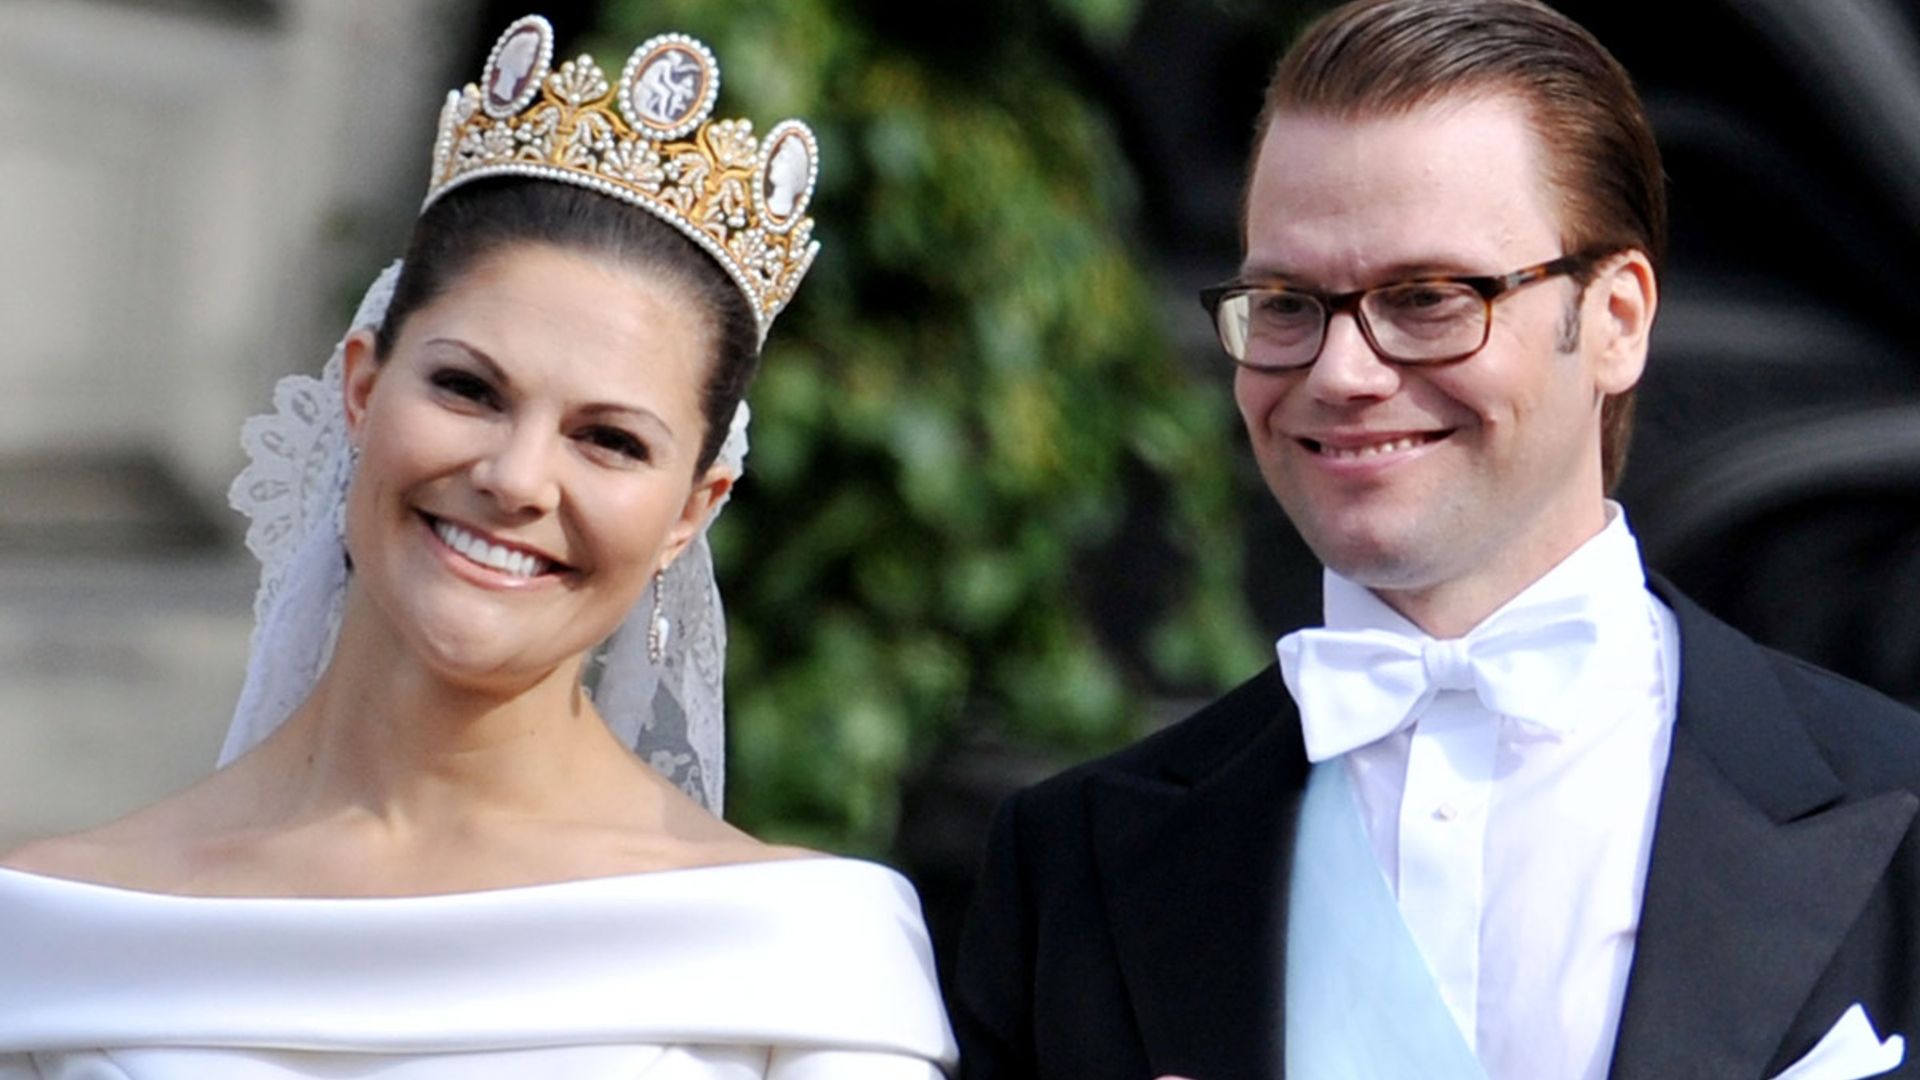 Crown Princess Victoria and Prince Daniel controversially broke royal wedding tradition